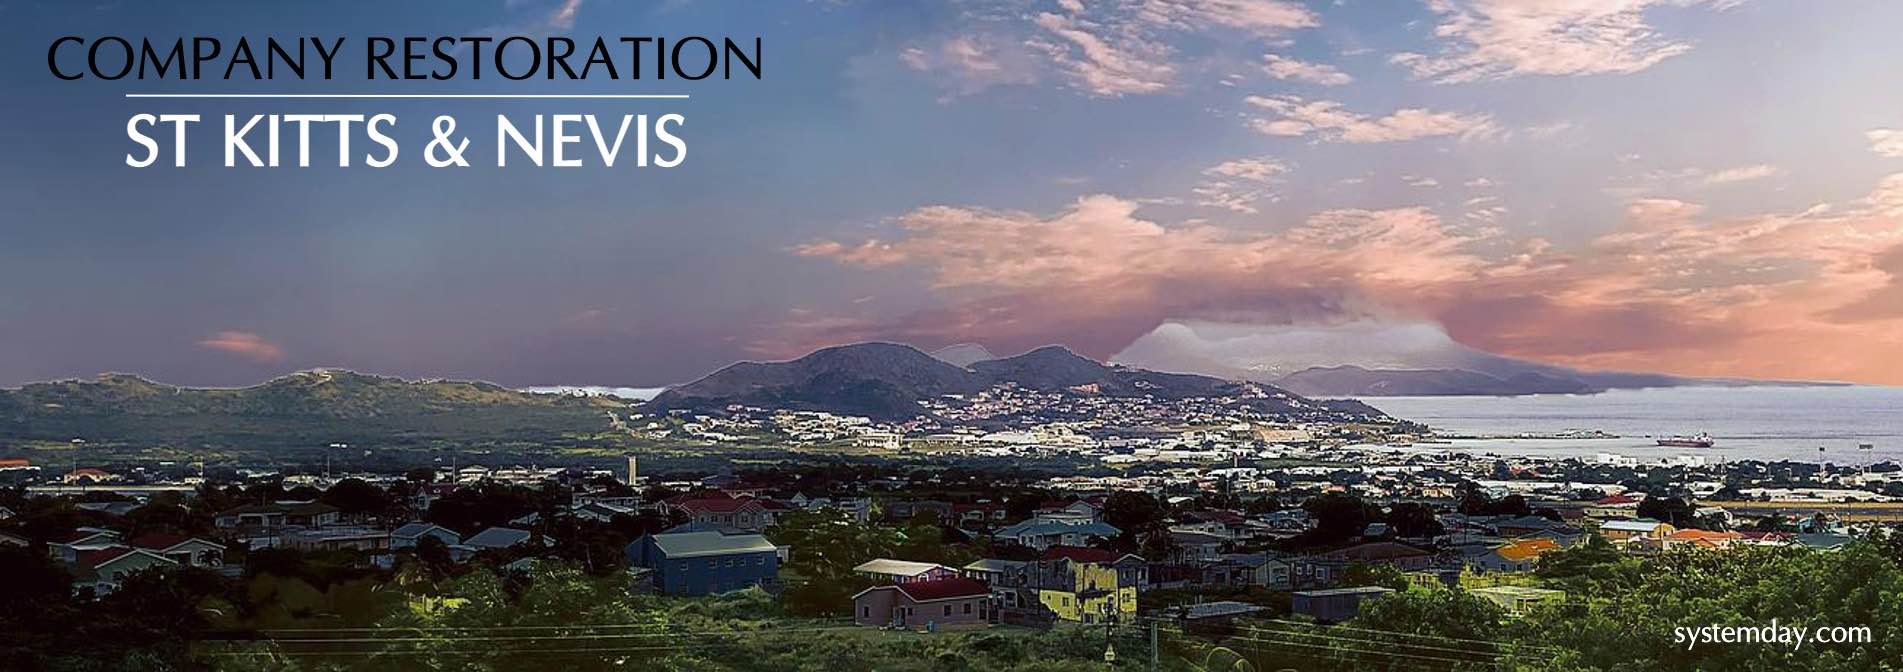 St Kitts and Nevis Company Restoration